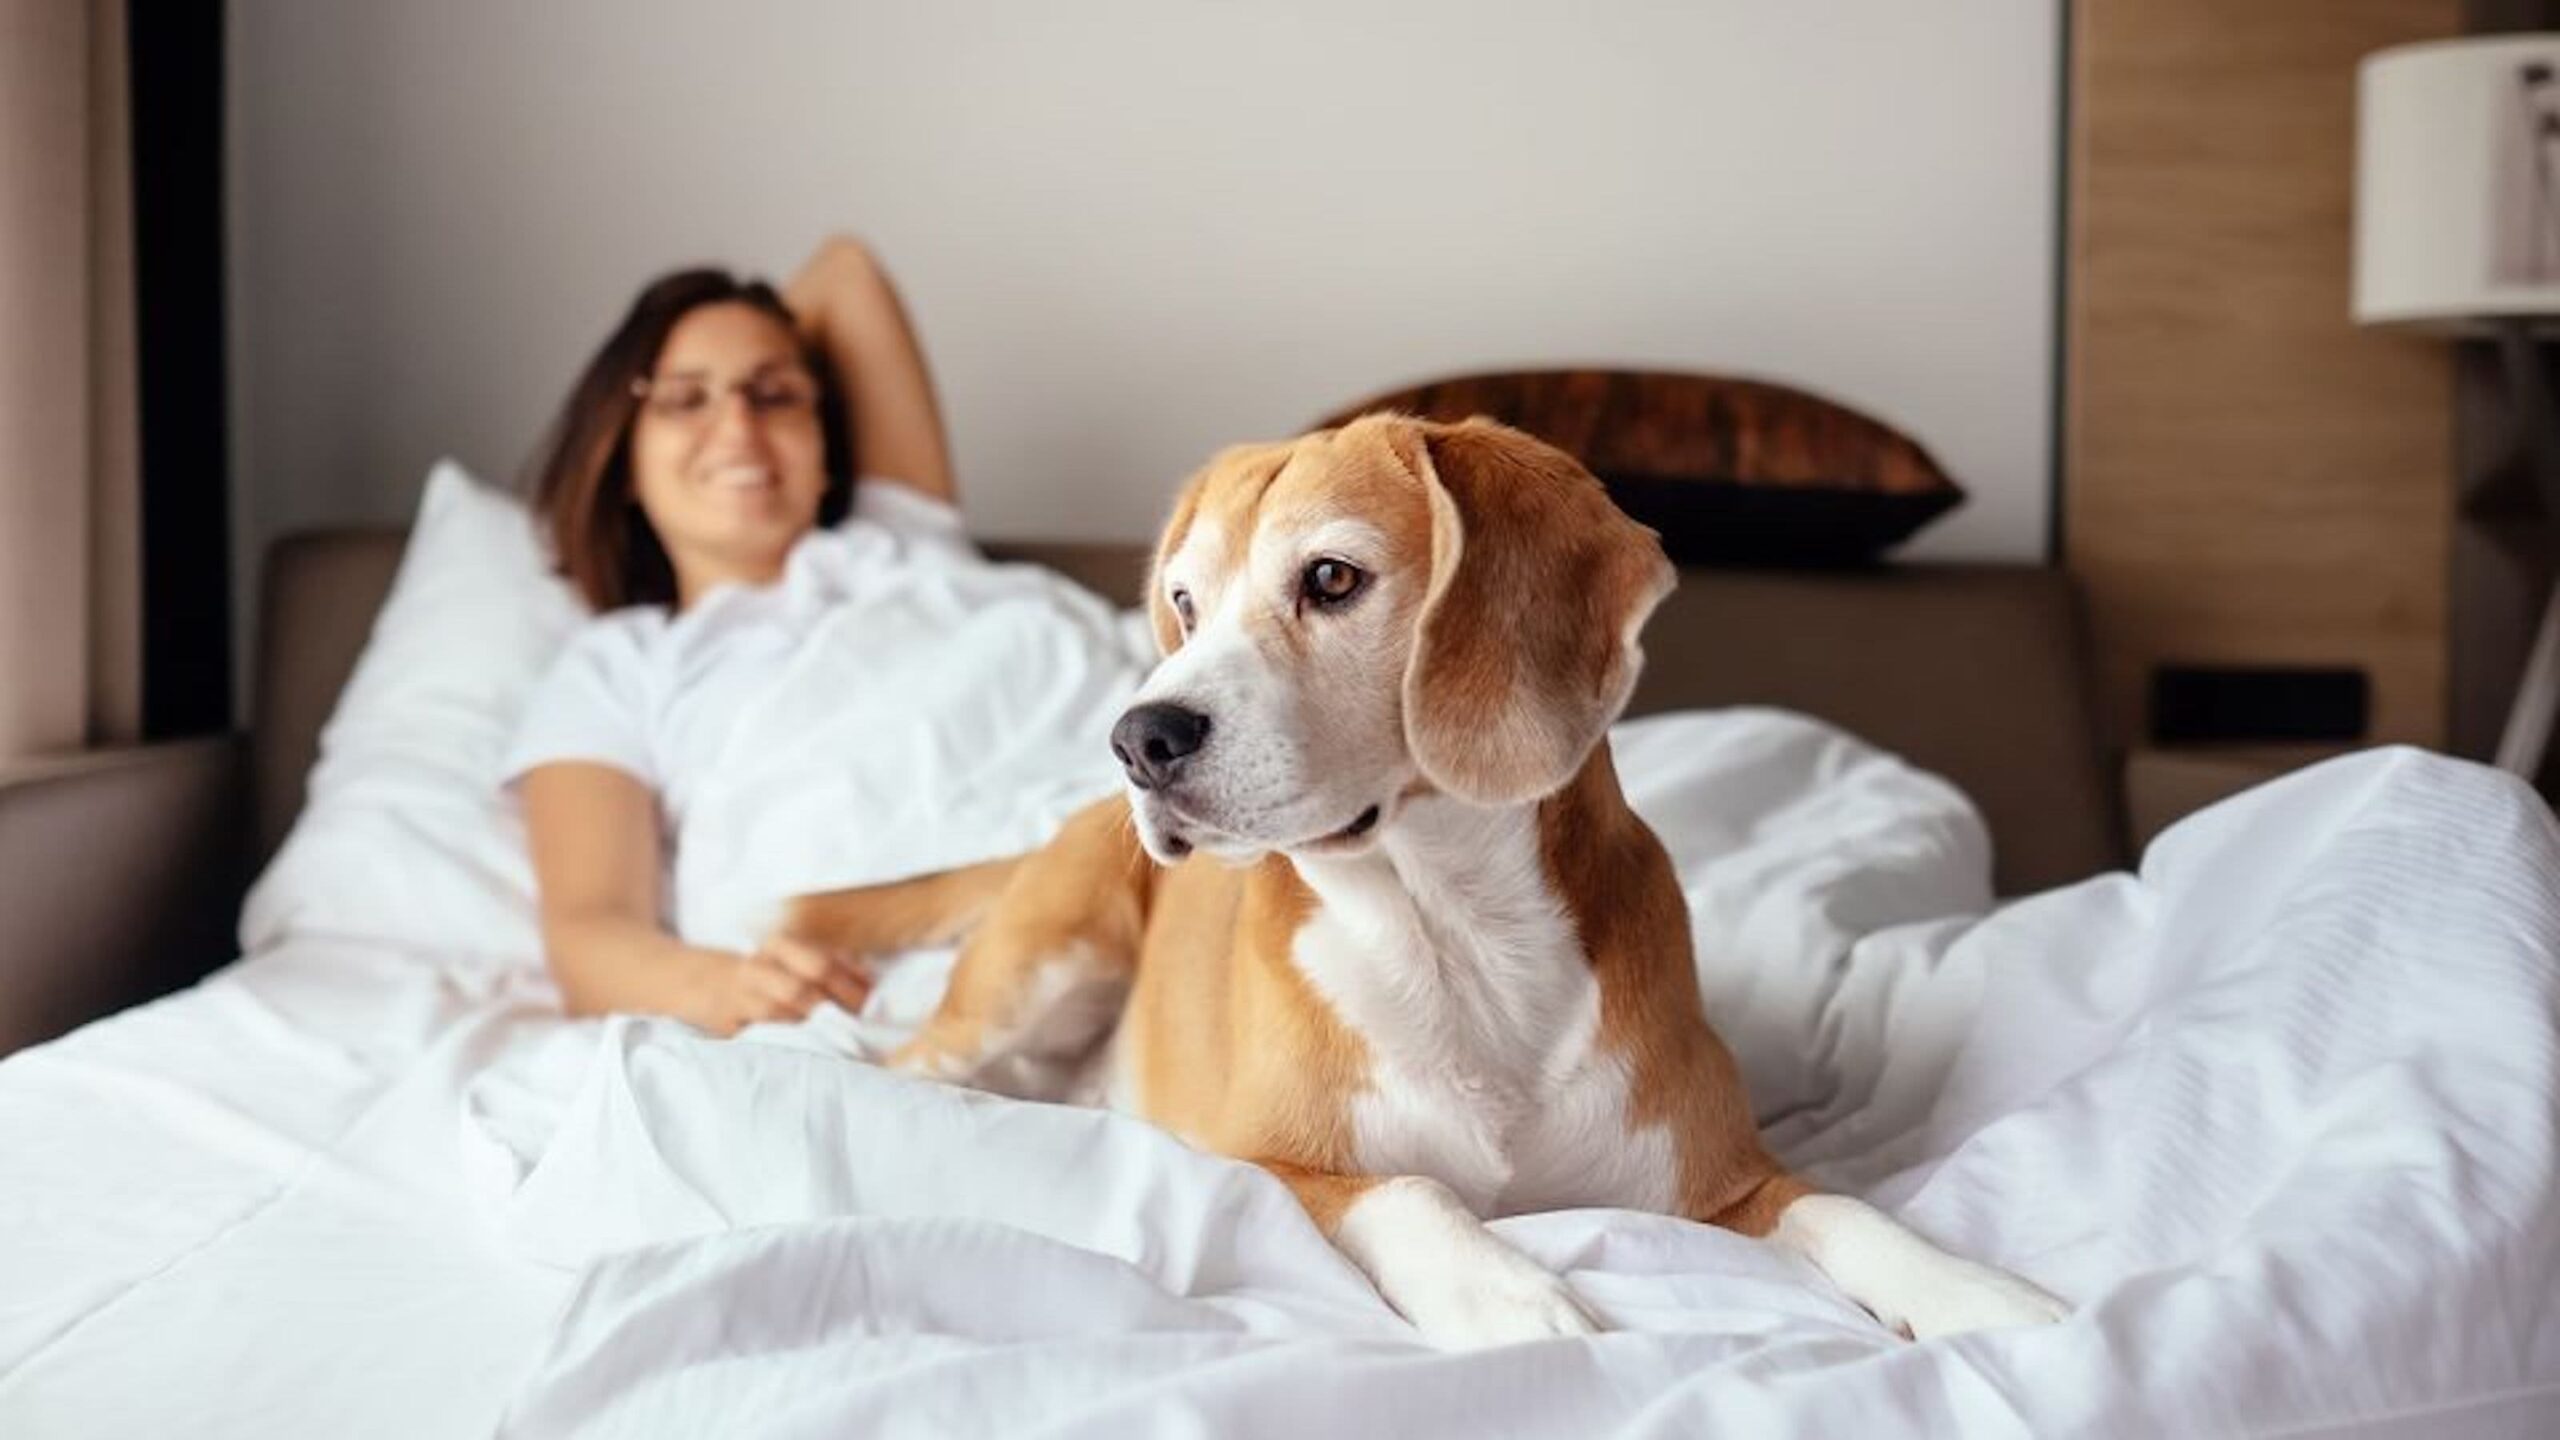 Hotels That Accept Pets Near Me: A Comprehensive Guide for Pet Parents